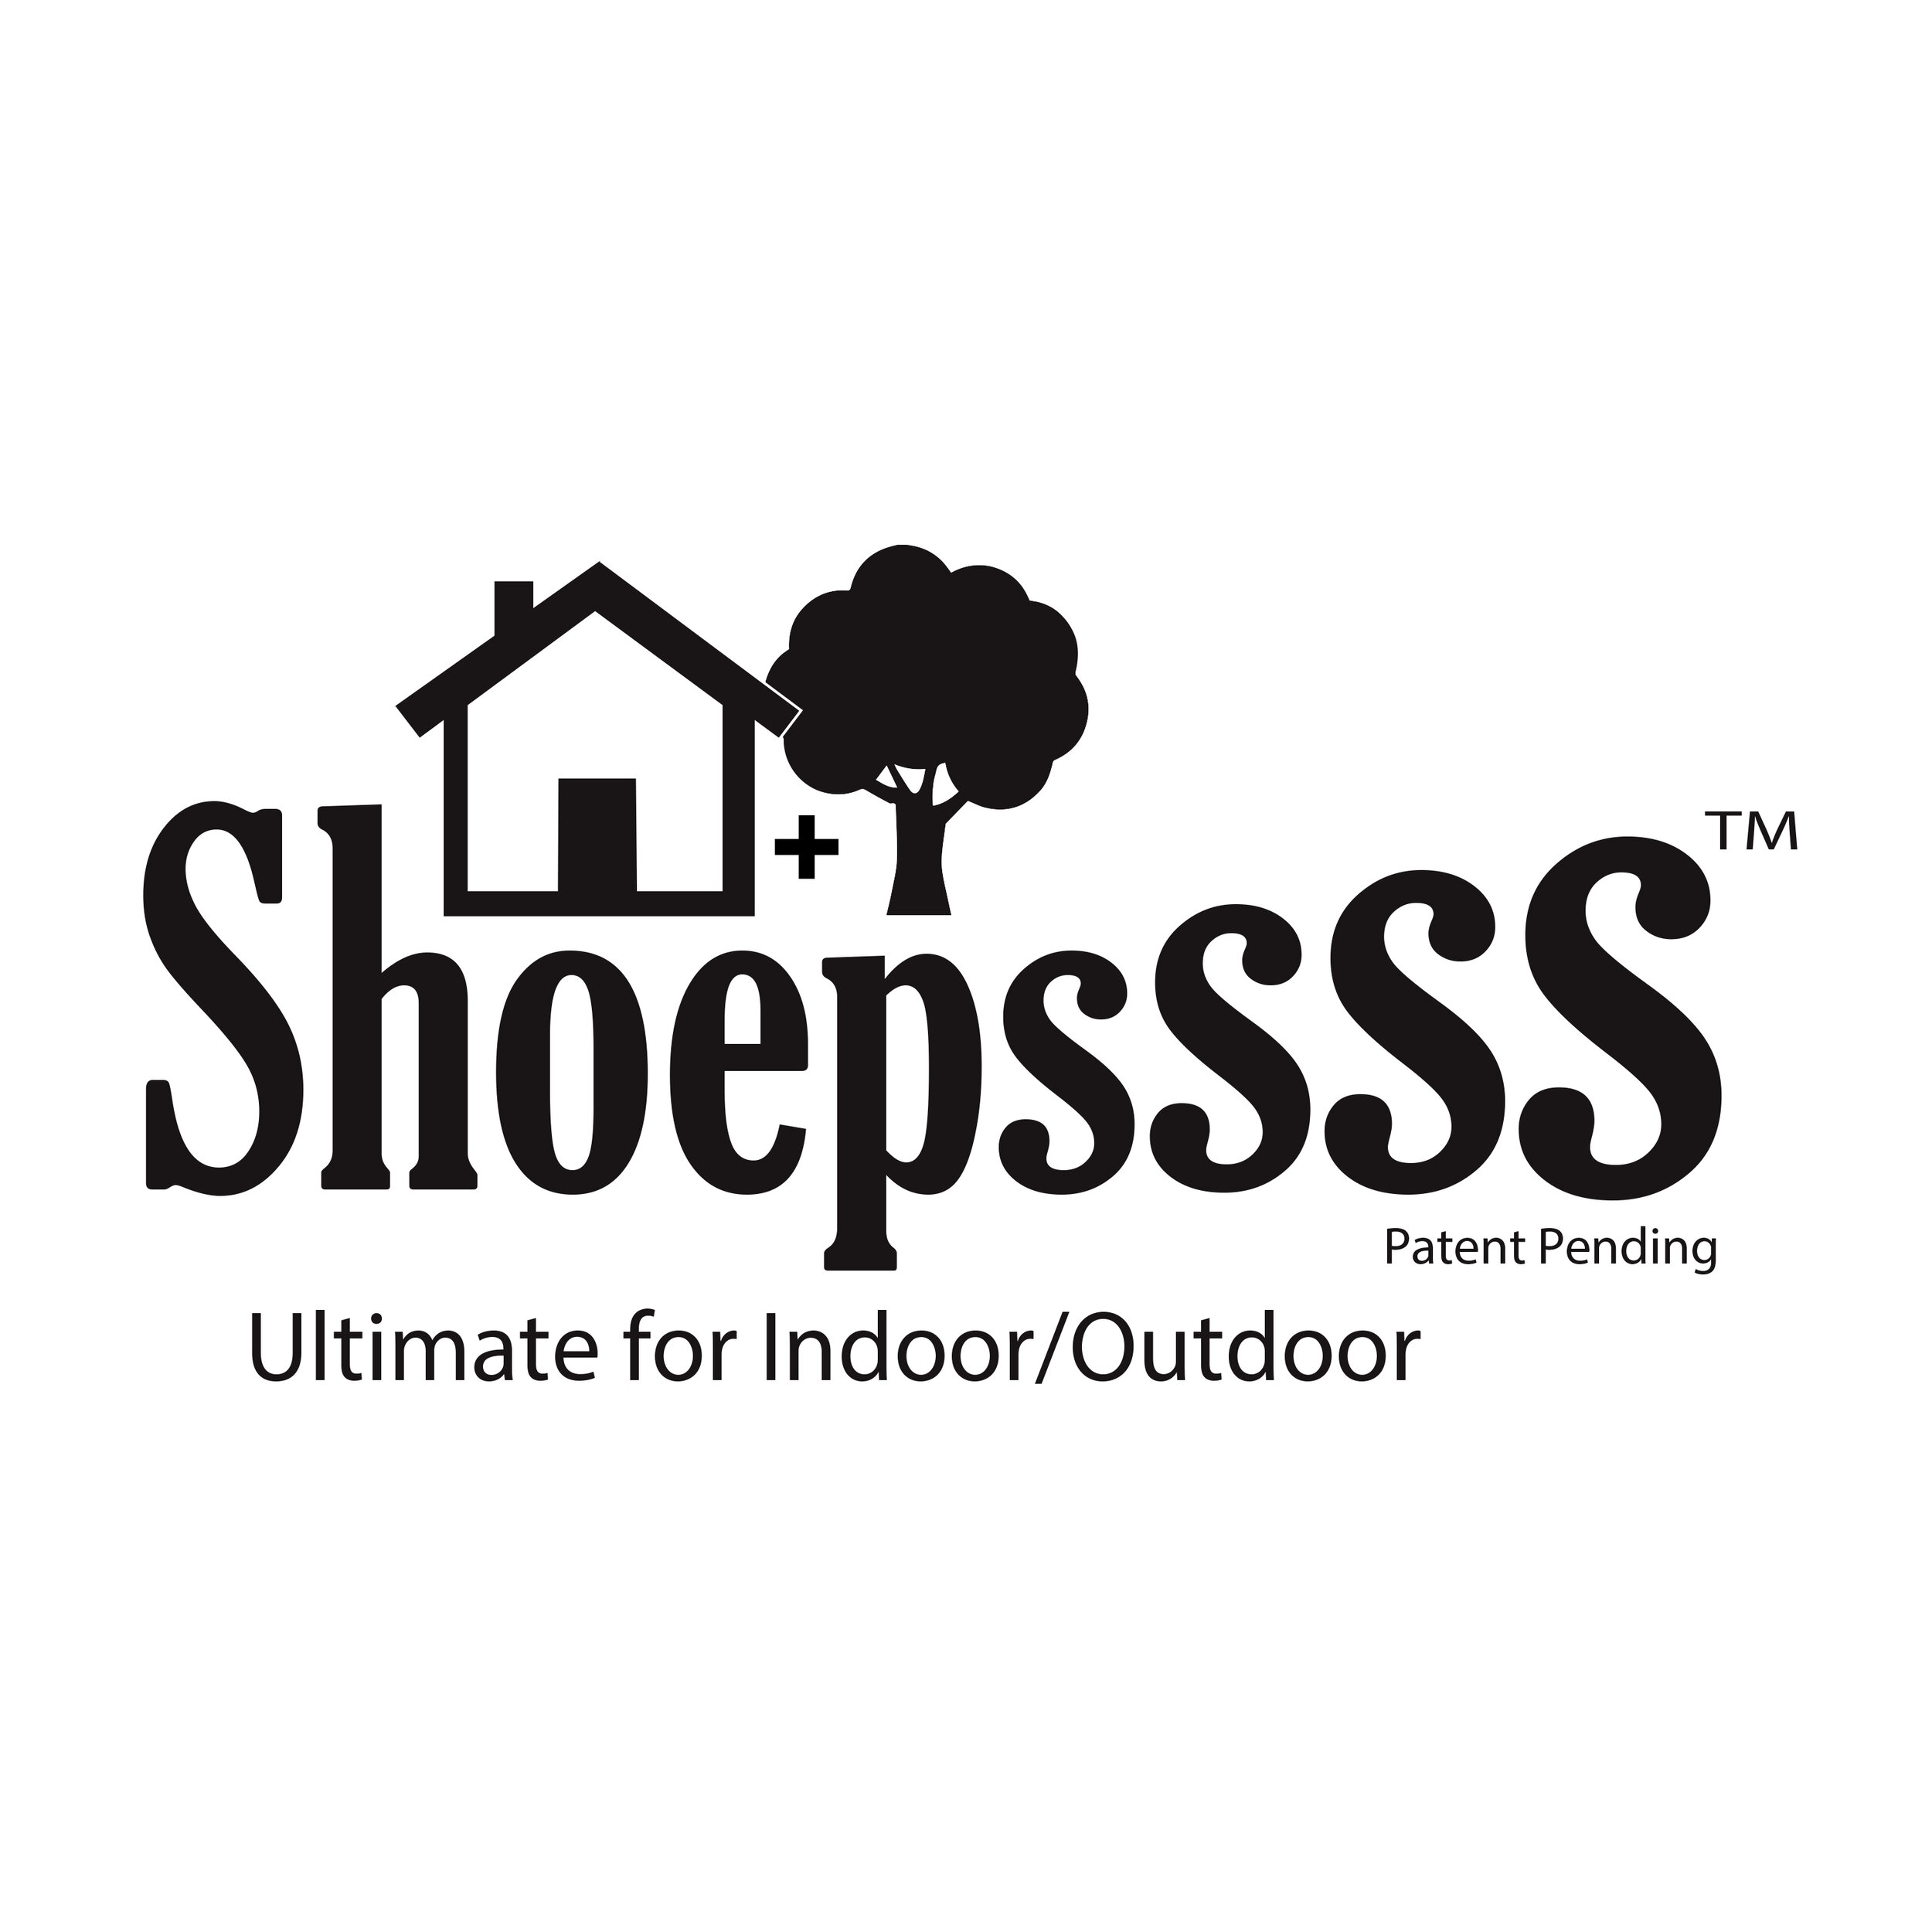 ShoepsssS Logo.jpg